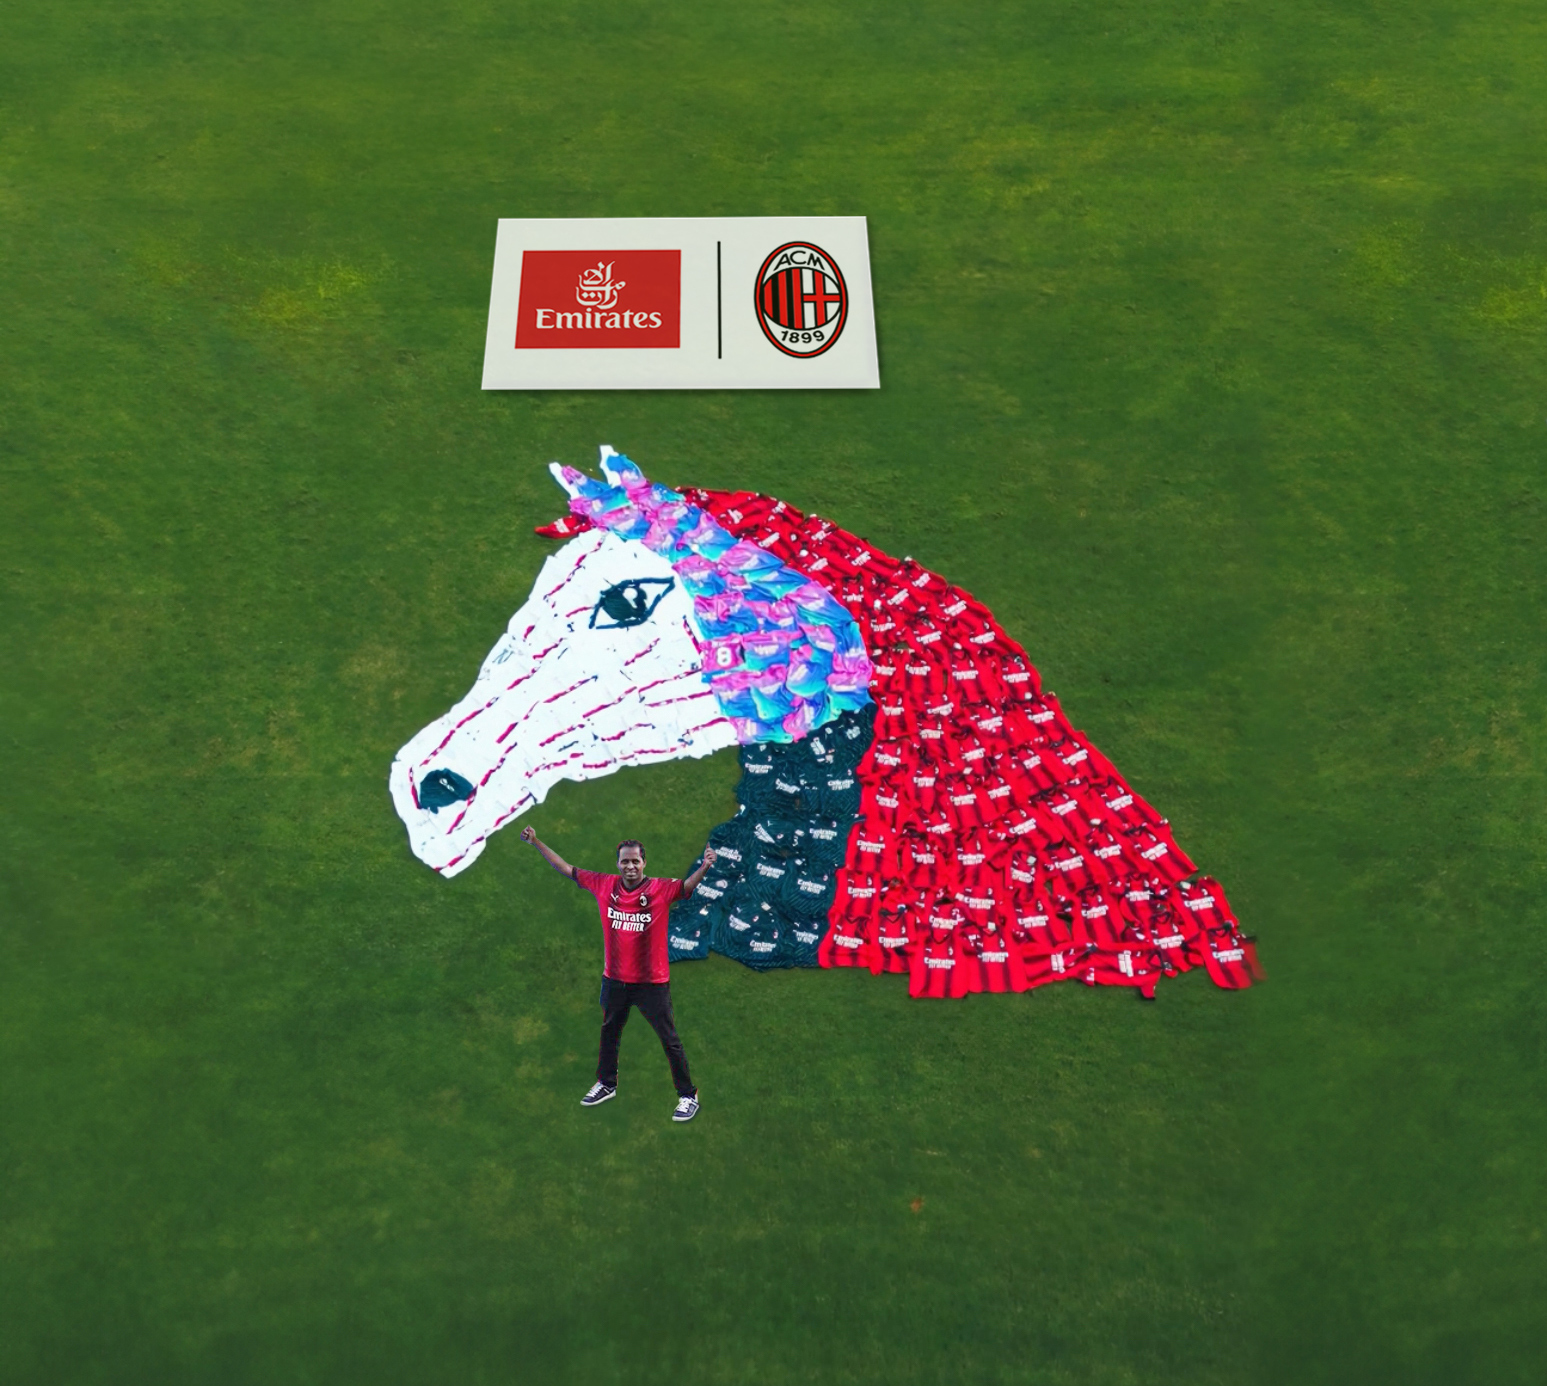 AC Milan & Emirates Art installation at Dubai World Cup